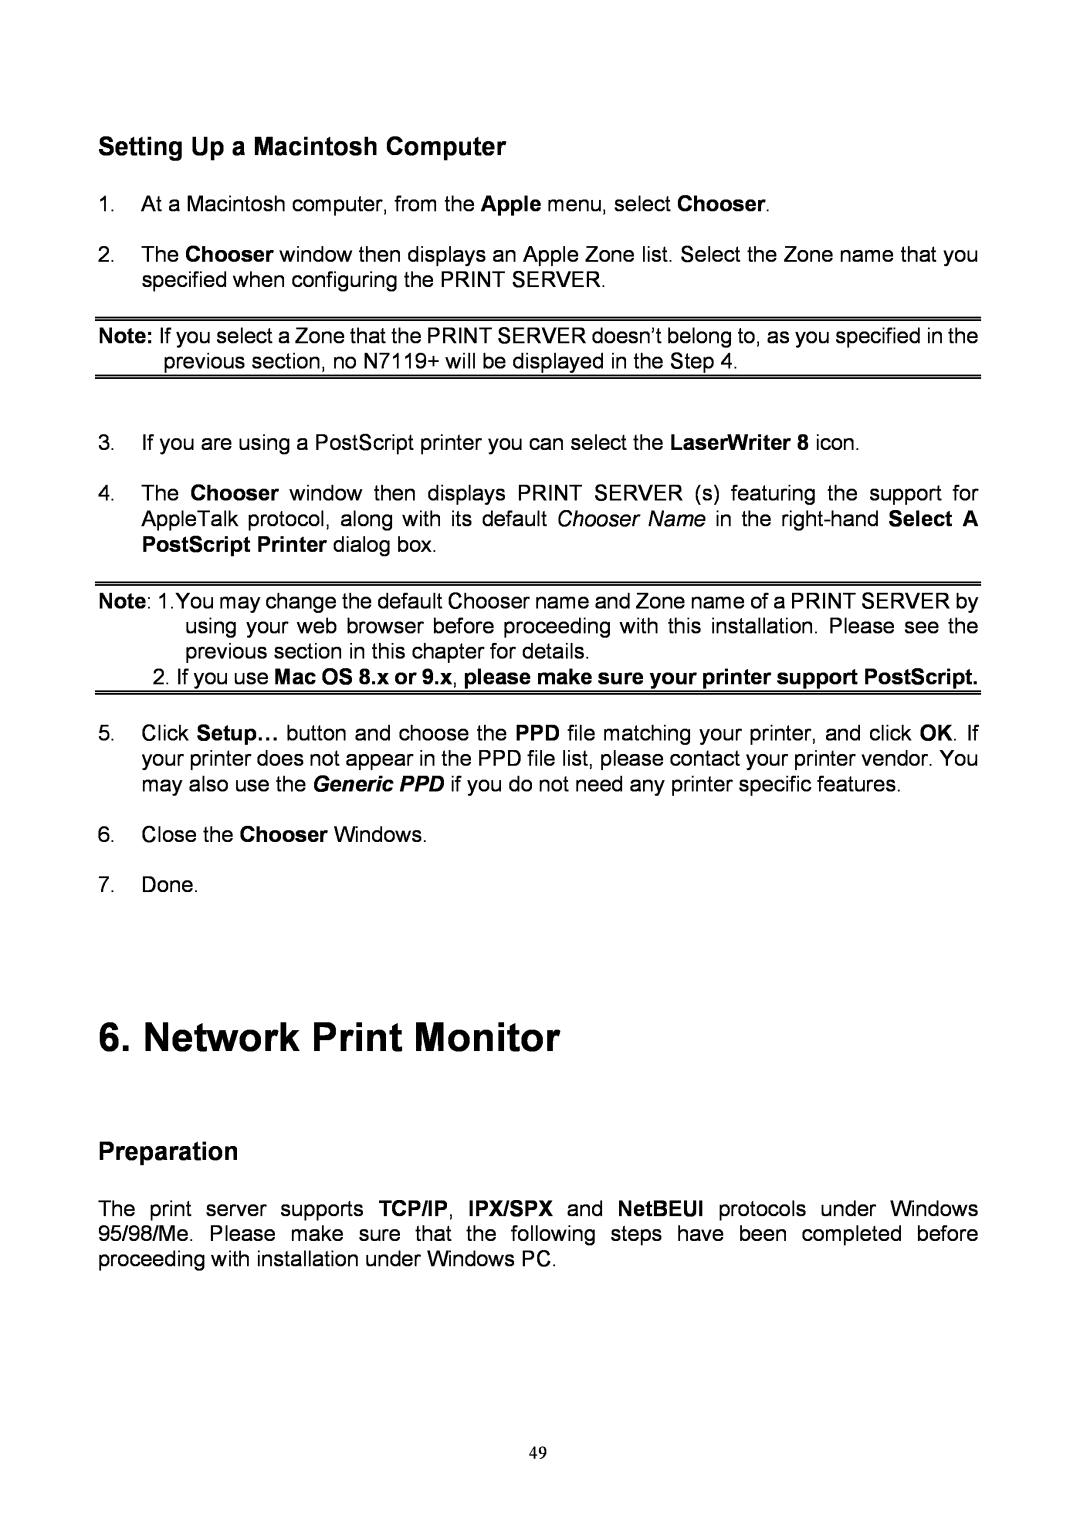 TRENDnet TEW-P1P, TEW-P1U manual Network Print Monitor, Setting Up a Macintosh Computer, Preparation 